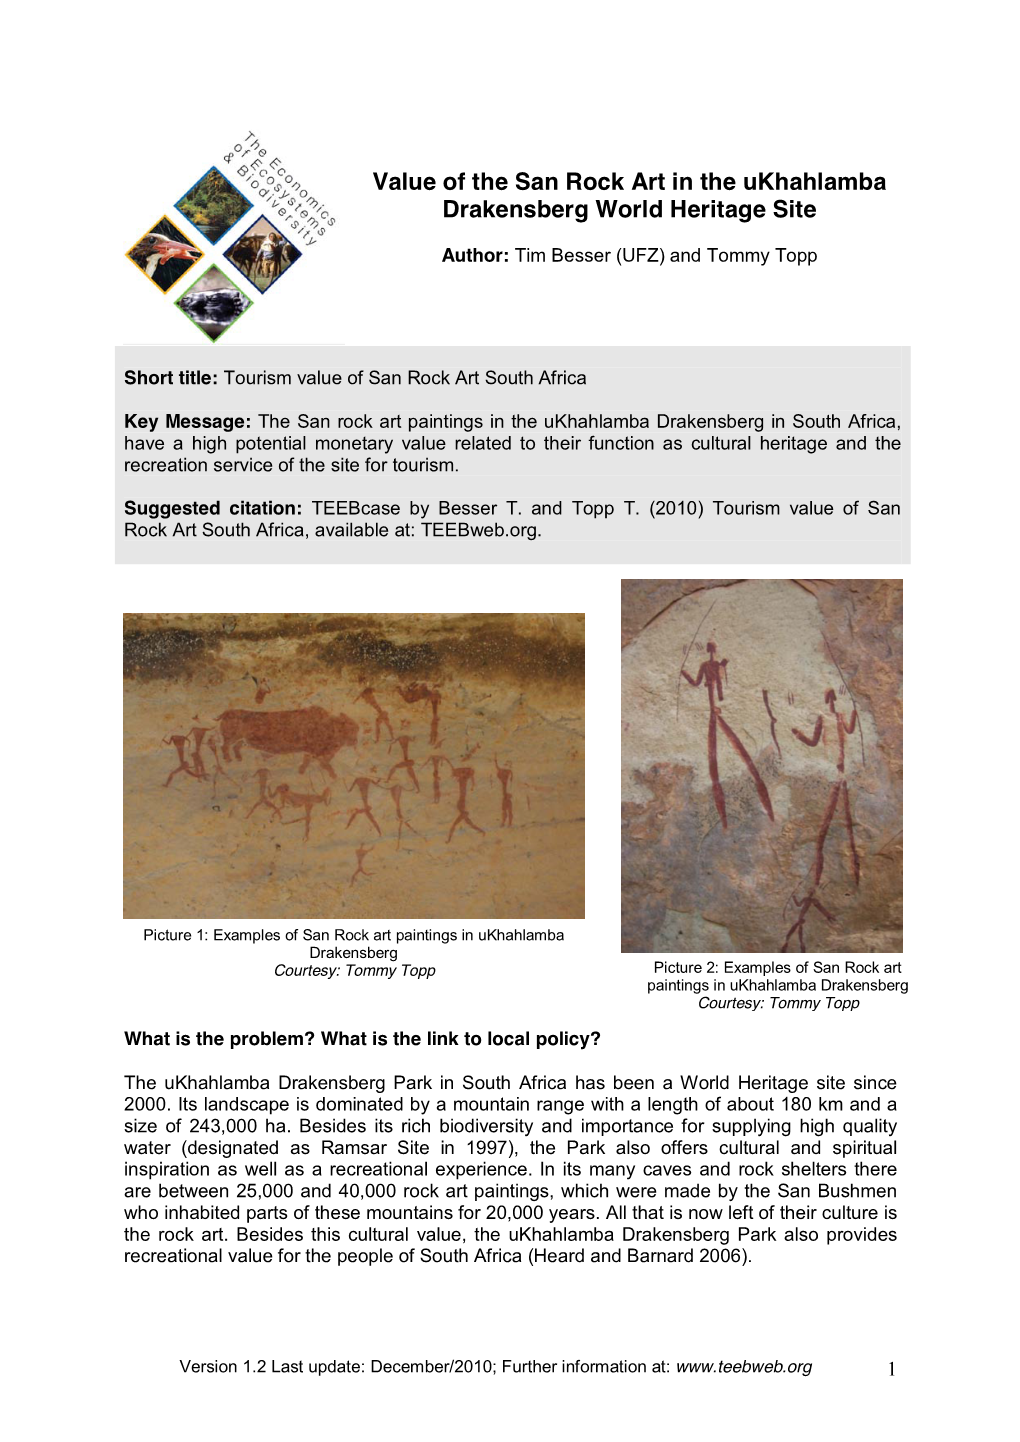 Value of the San Rock Art in the Ukhahlamba Drakensberg World Heritage Site